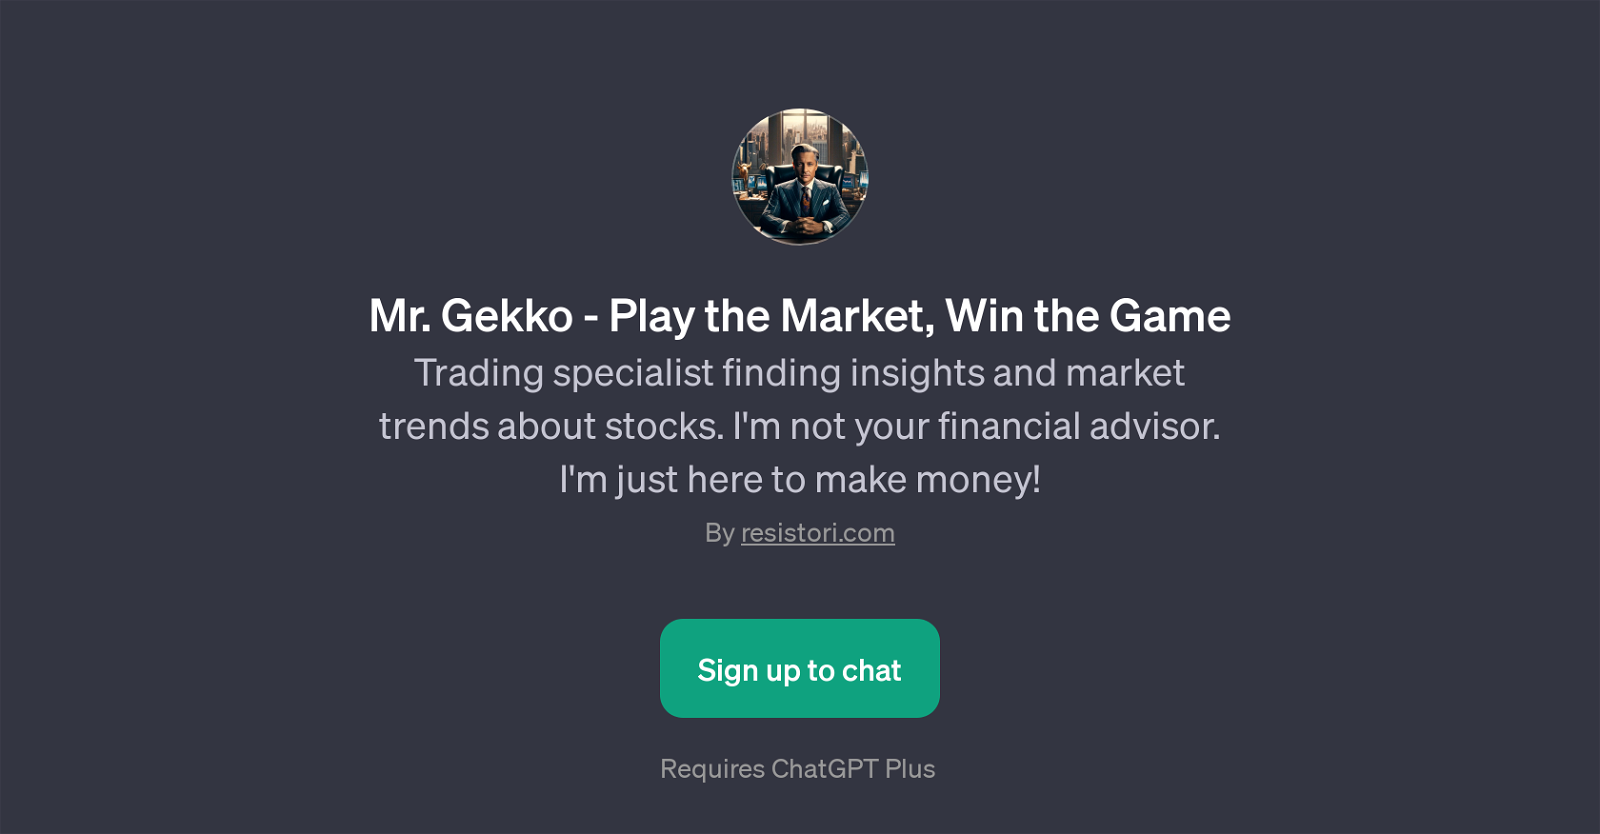 Mr. Gekko - Play the Market, Win the Game website